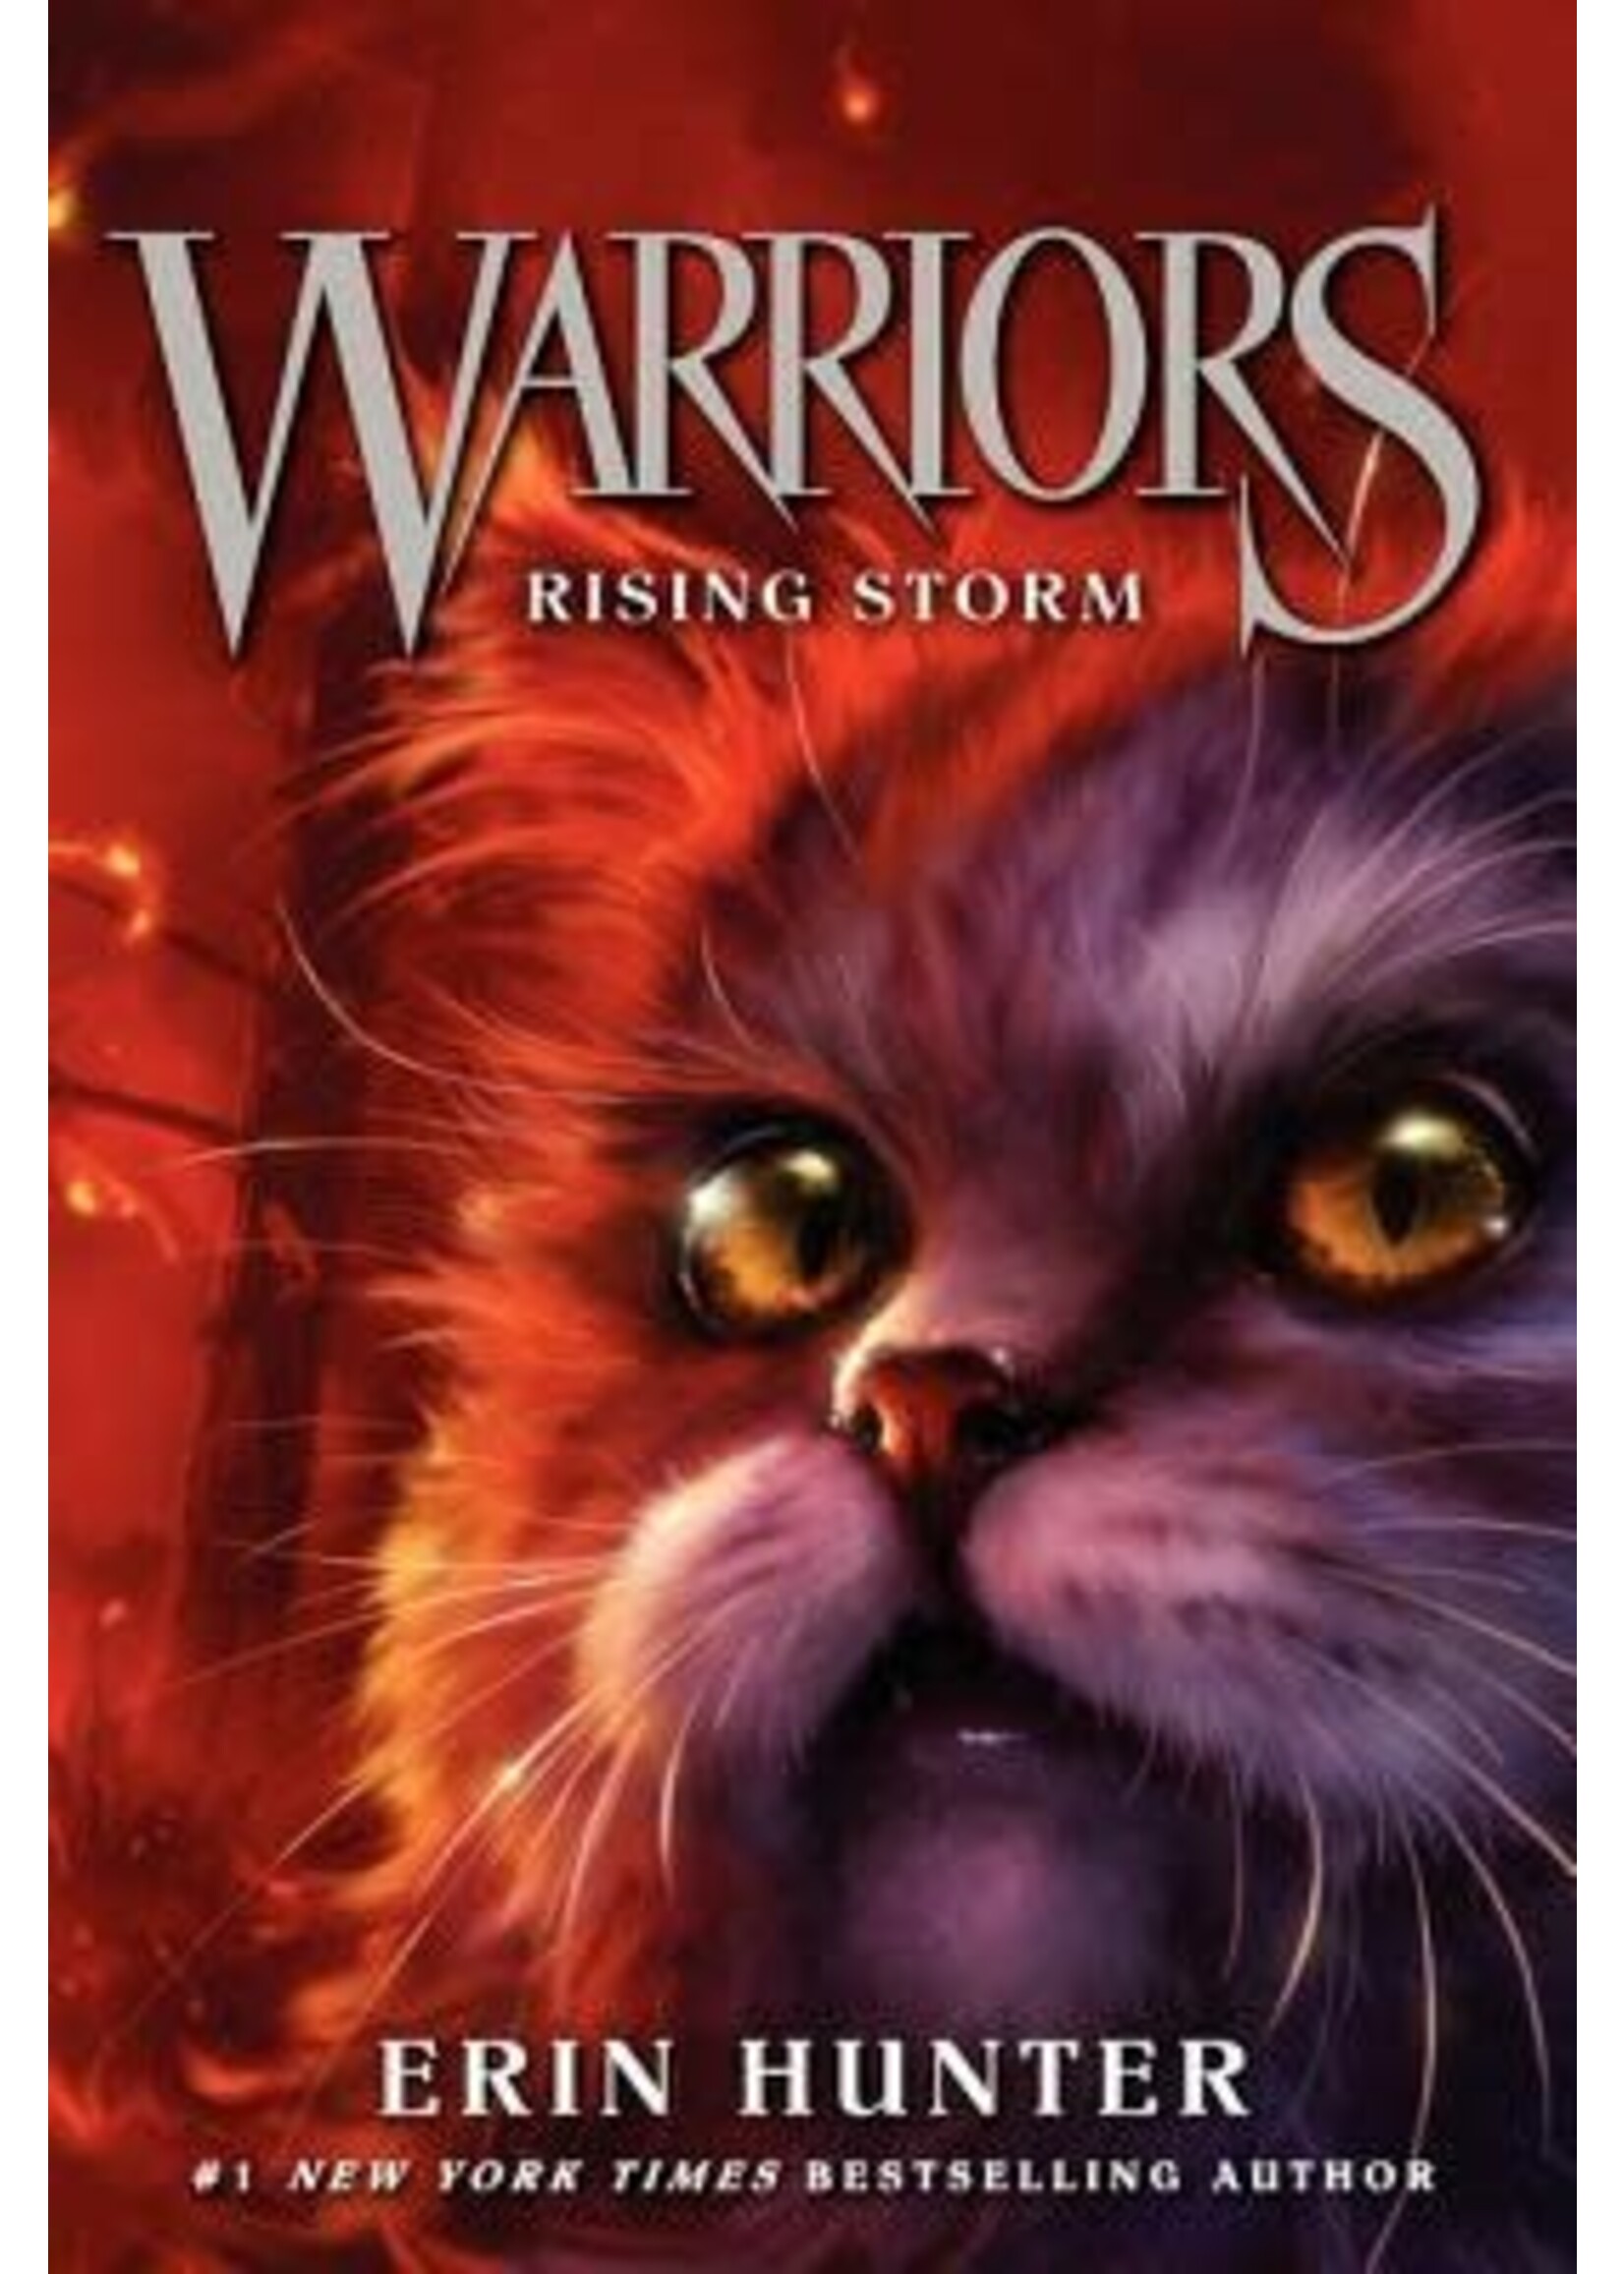 Rising Storm (Warriors: The Prophecies Begin #4) by Erin Hunter